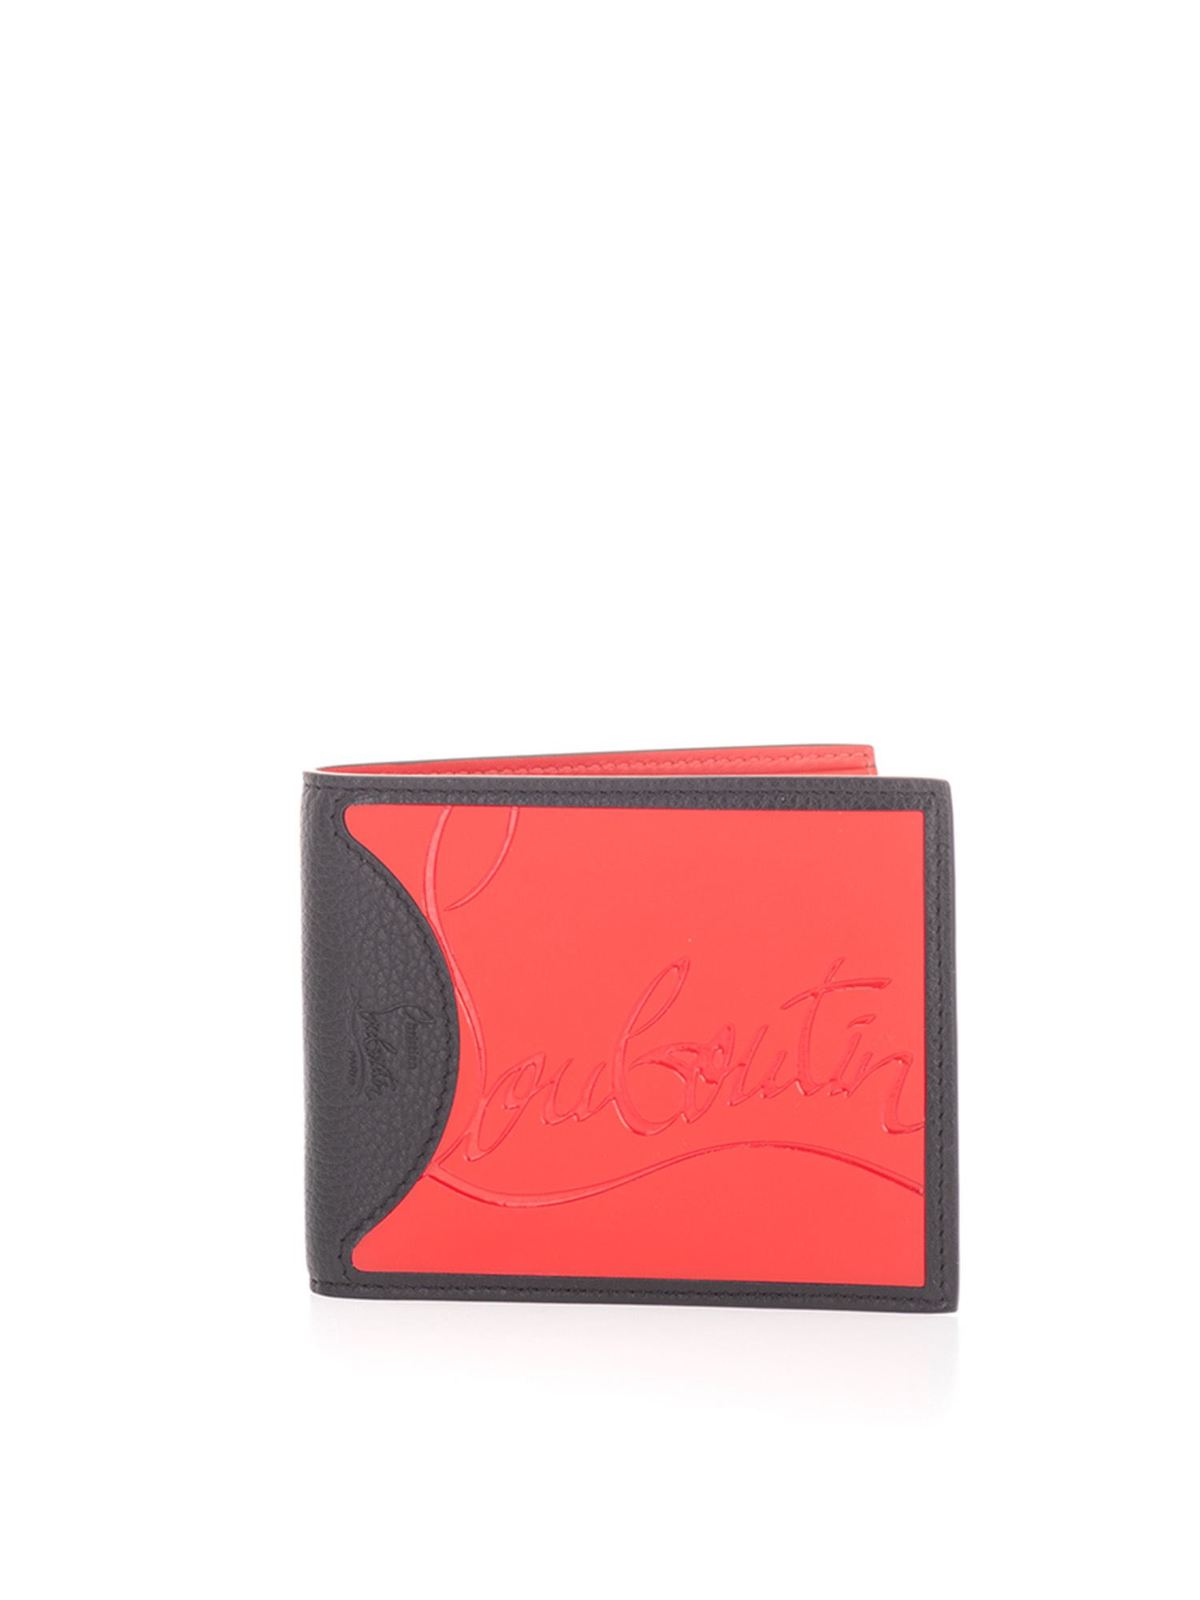 Wallets & purses Christian Louboutin - Coolcard wallet in black